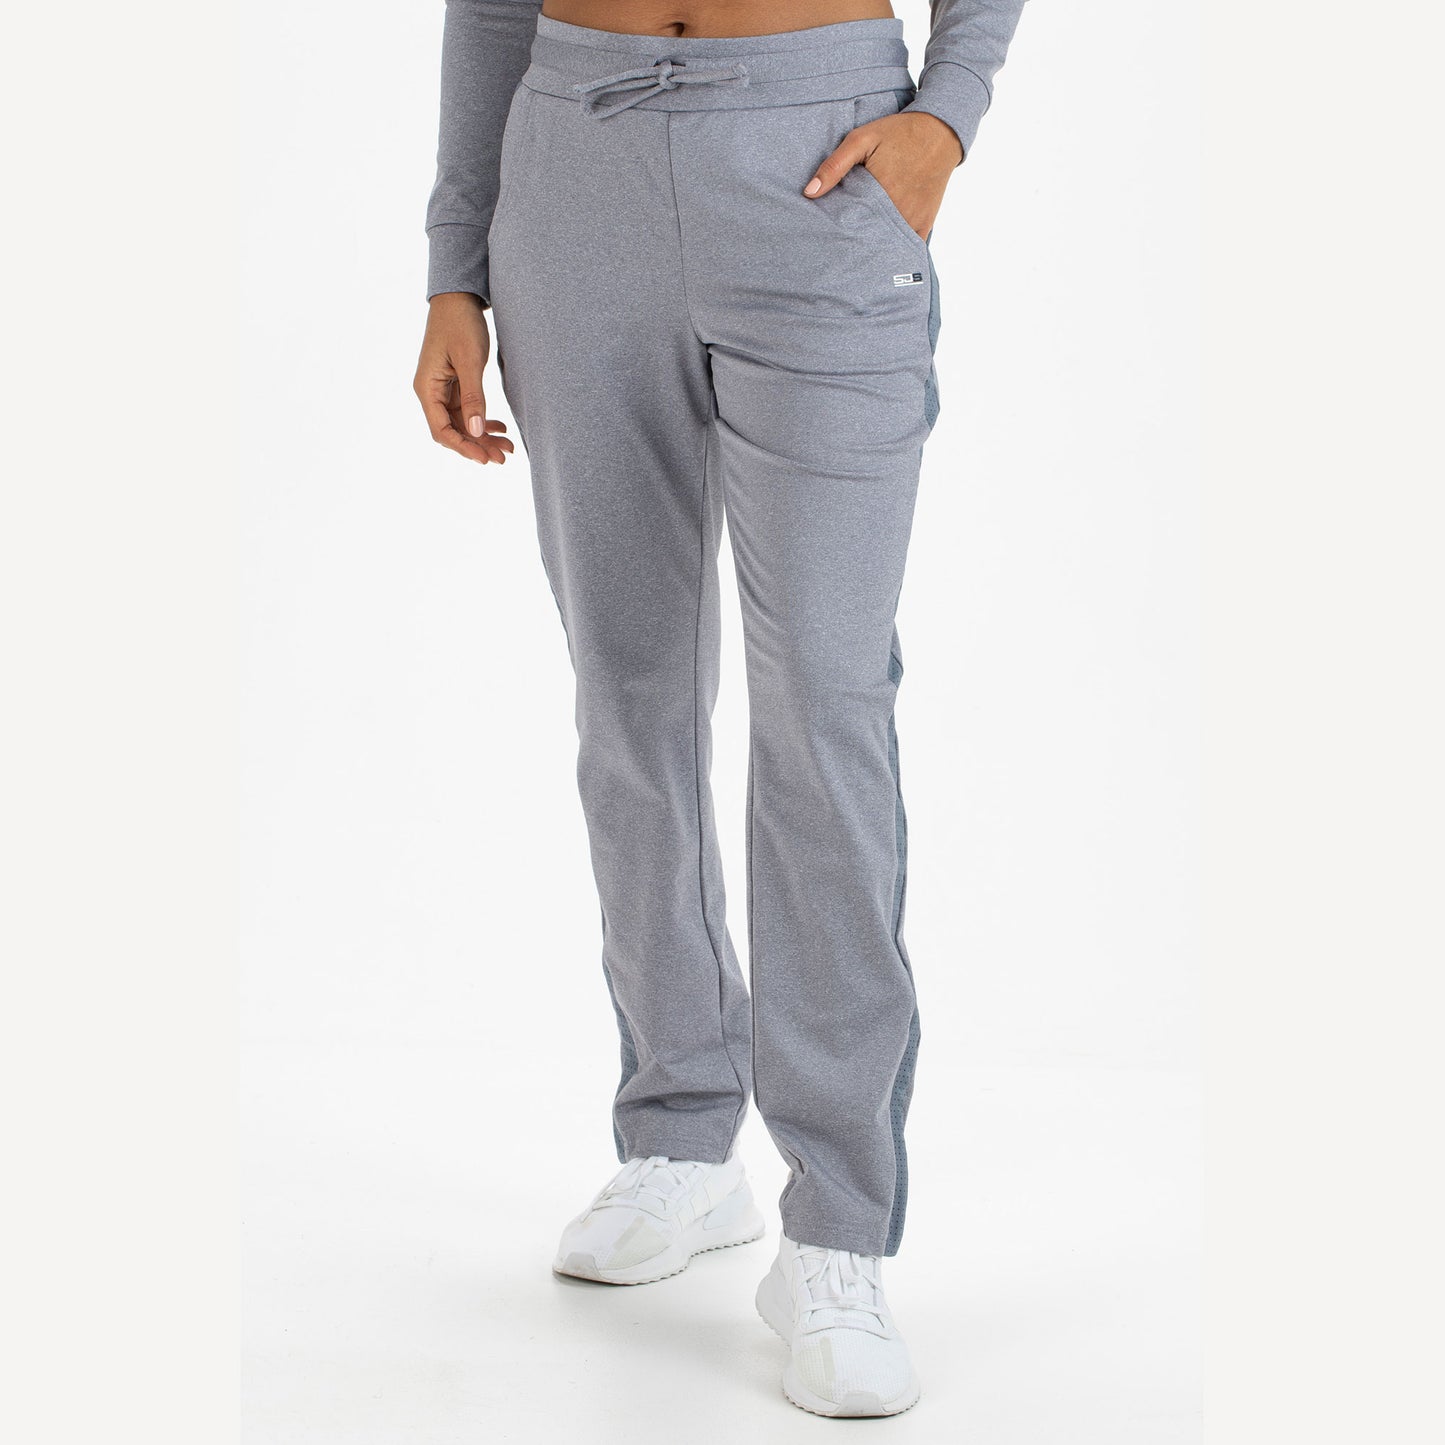 Sjeng Sports Gila Women's Tennis Pants Grey (1)